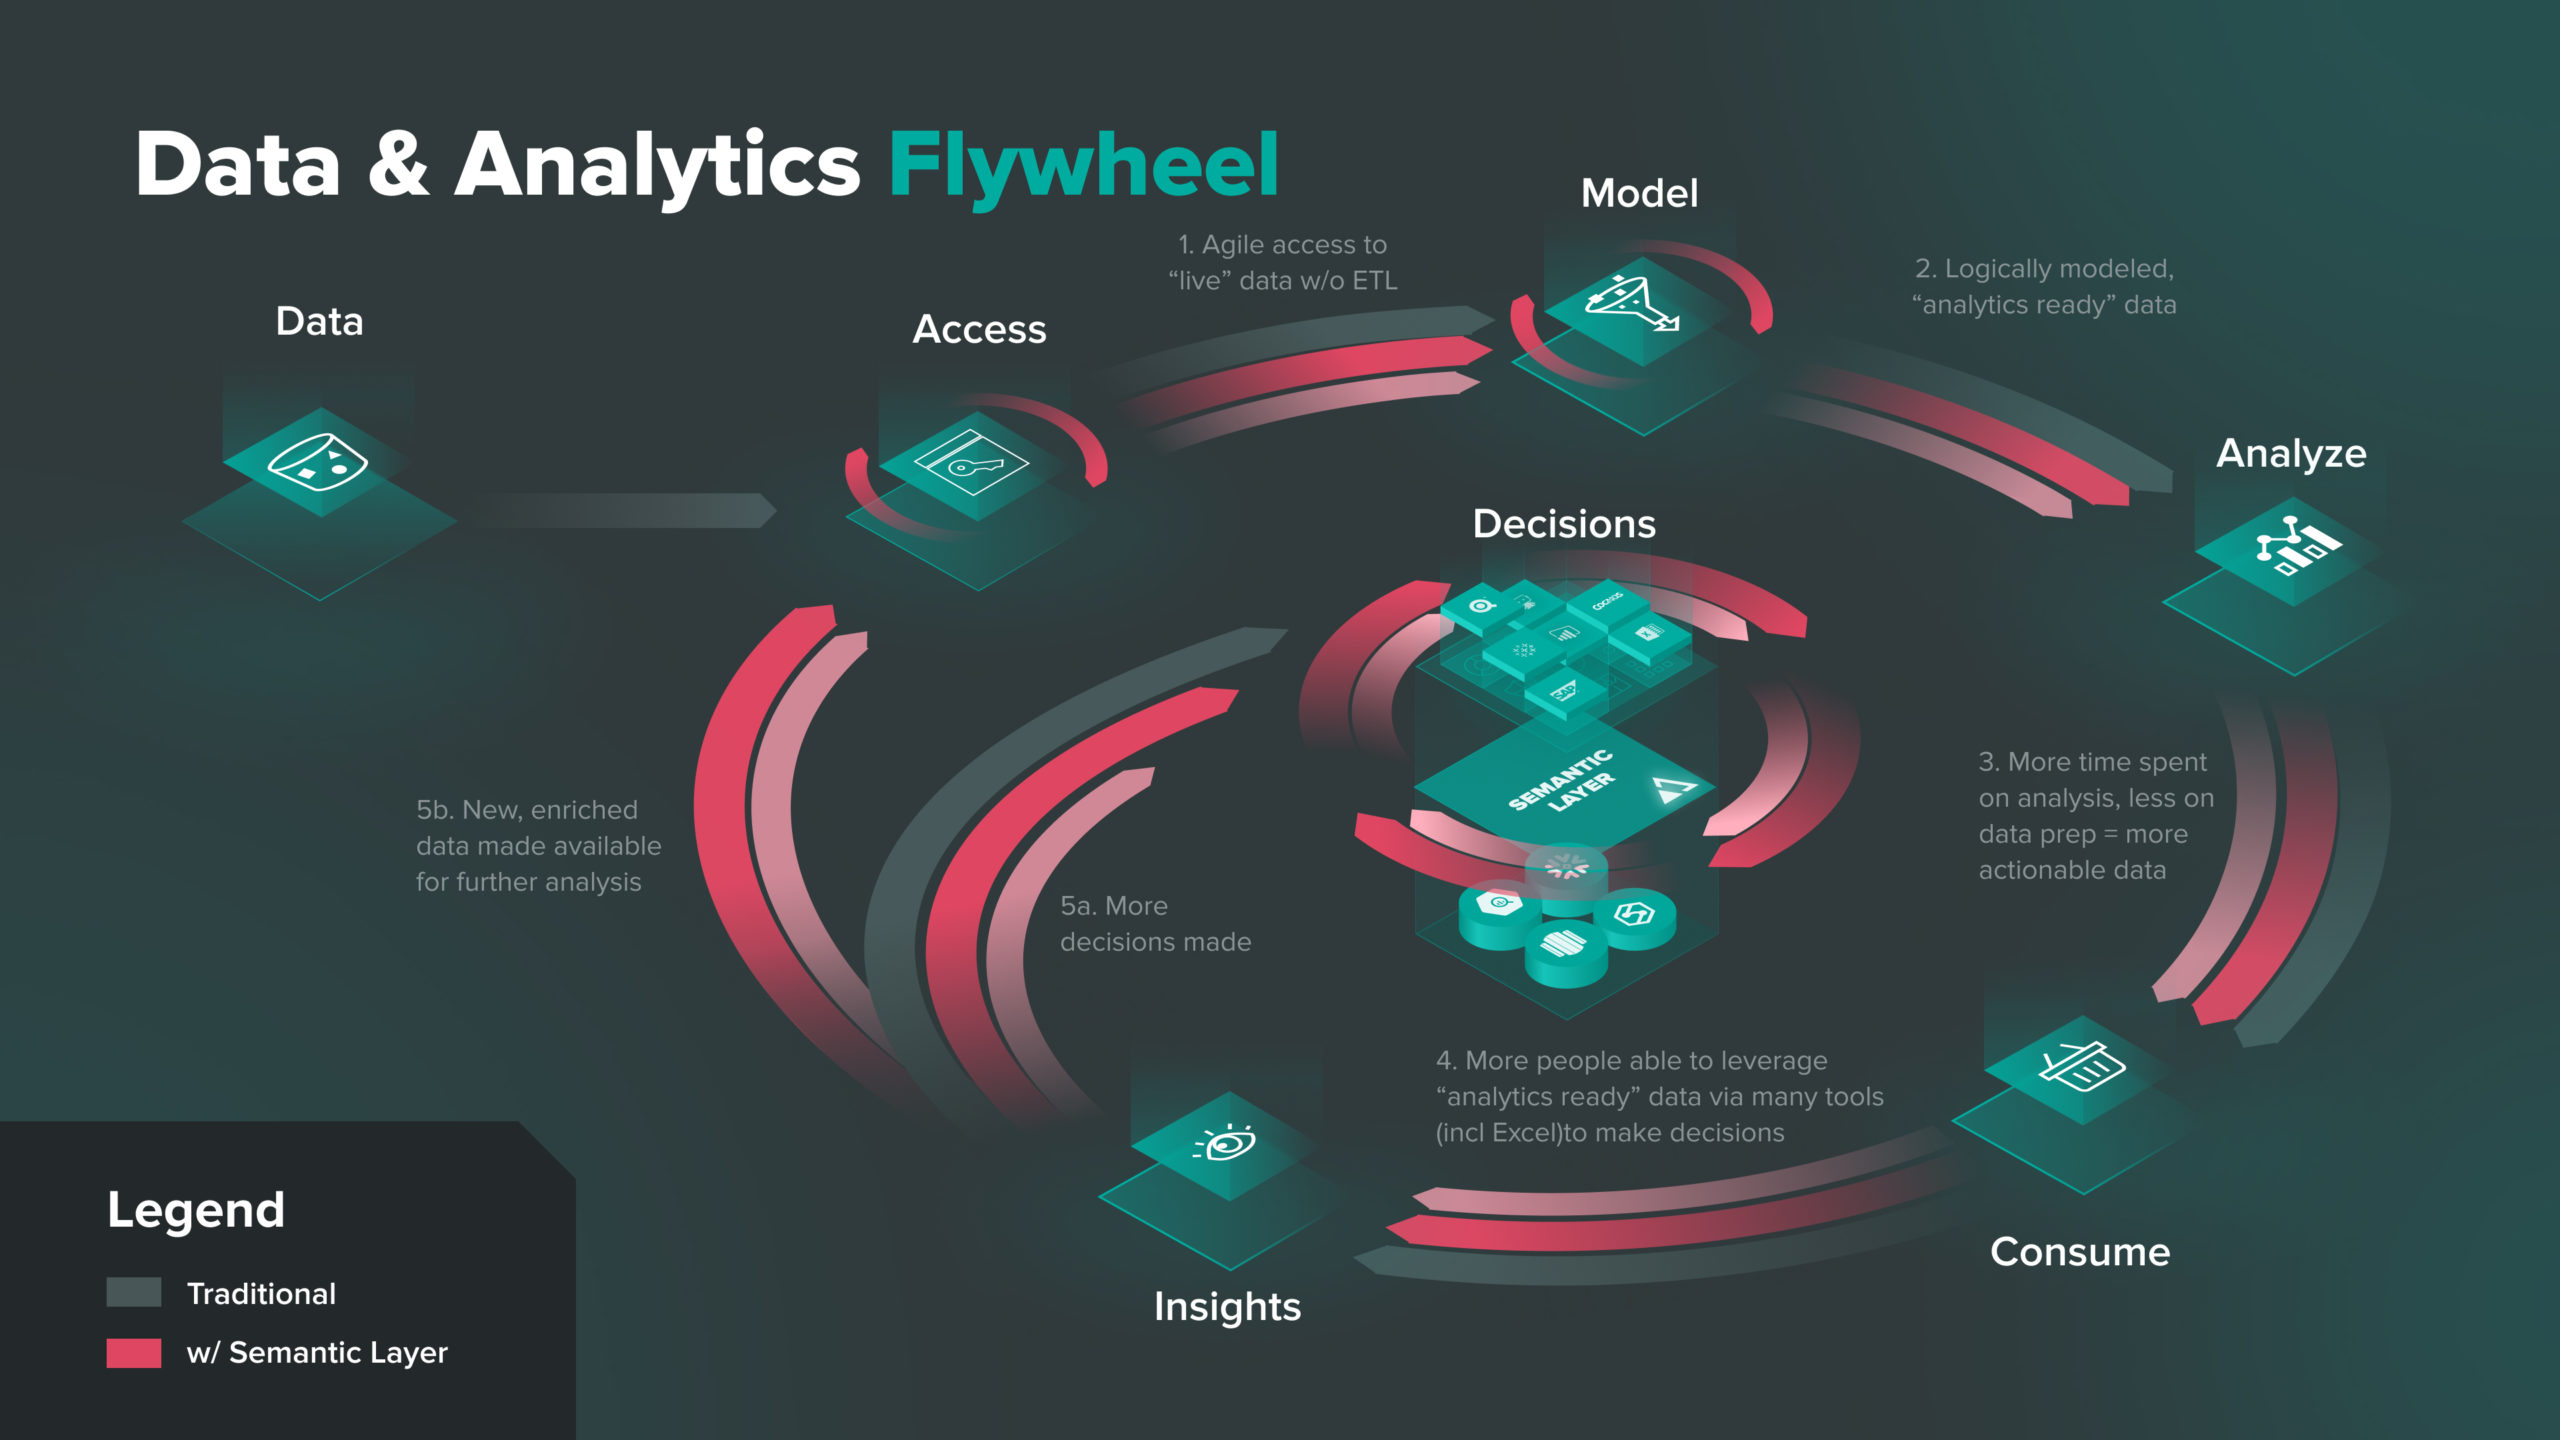 The Data & Analytics Flywheel